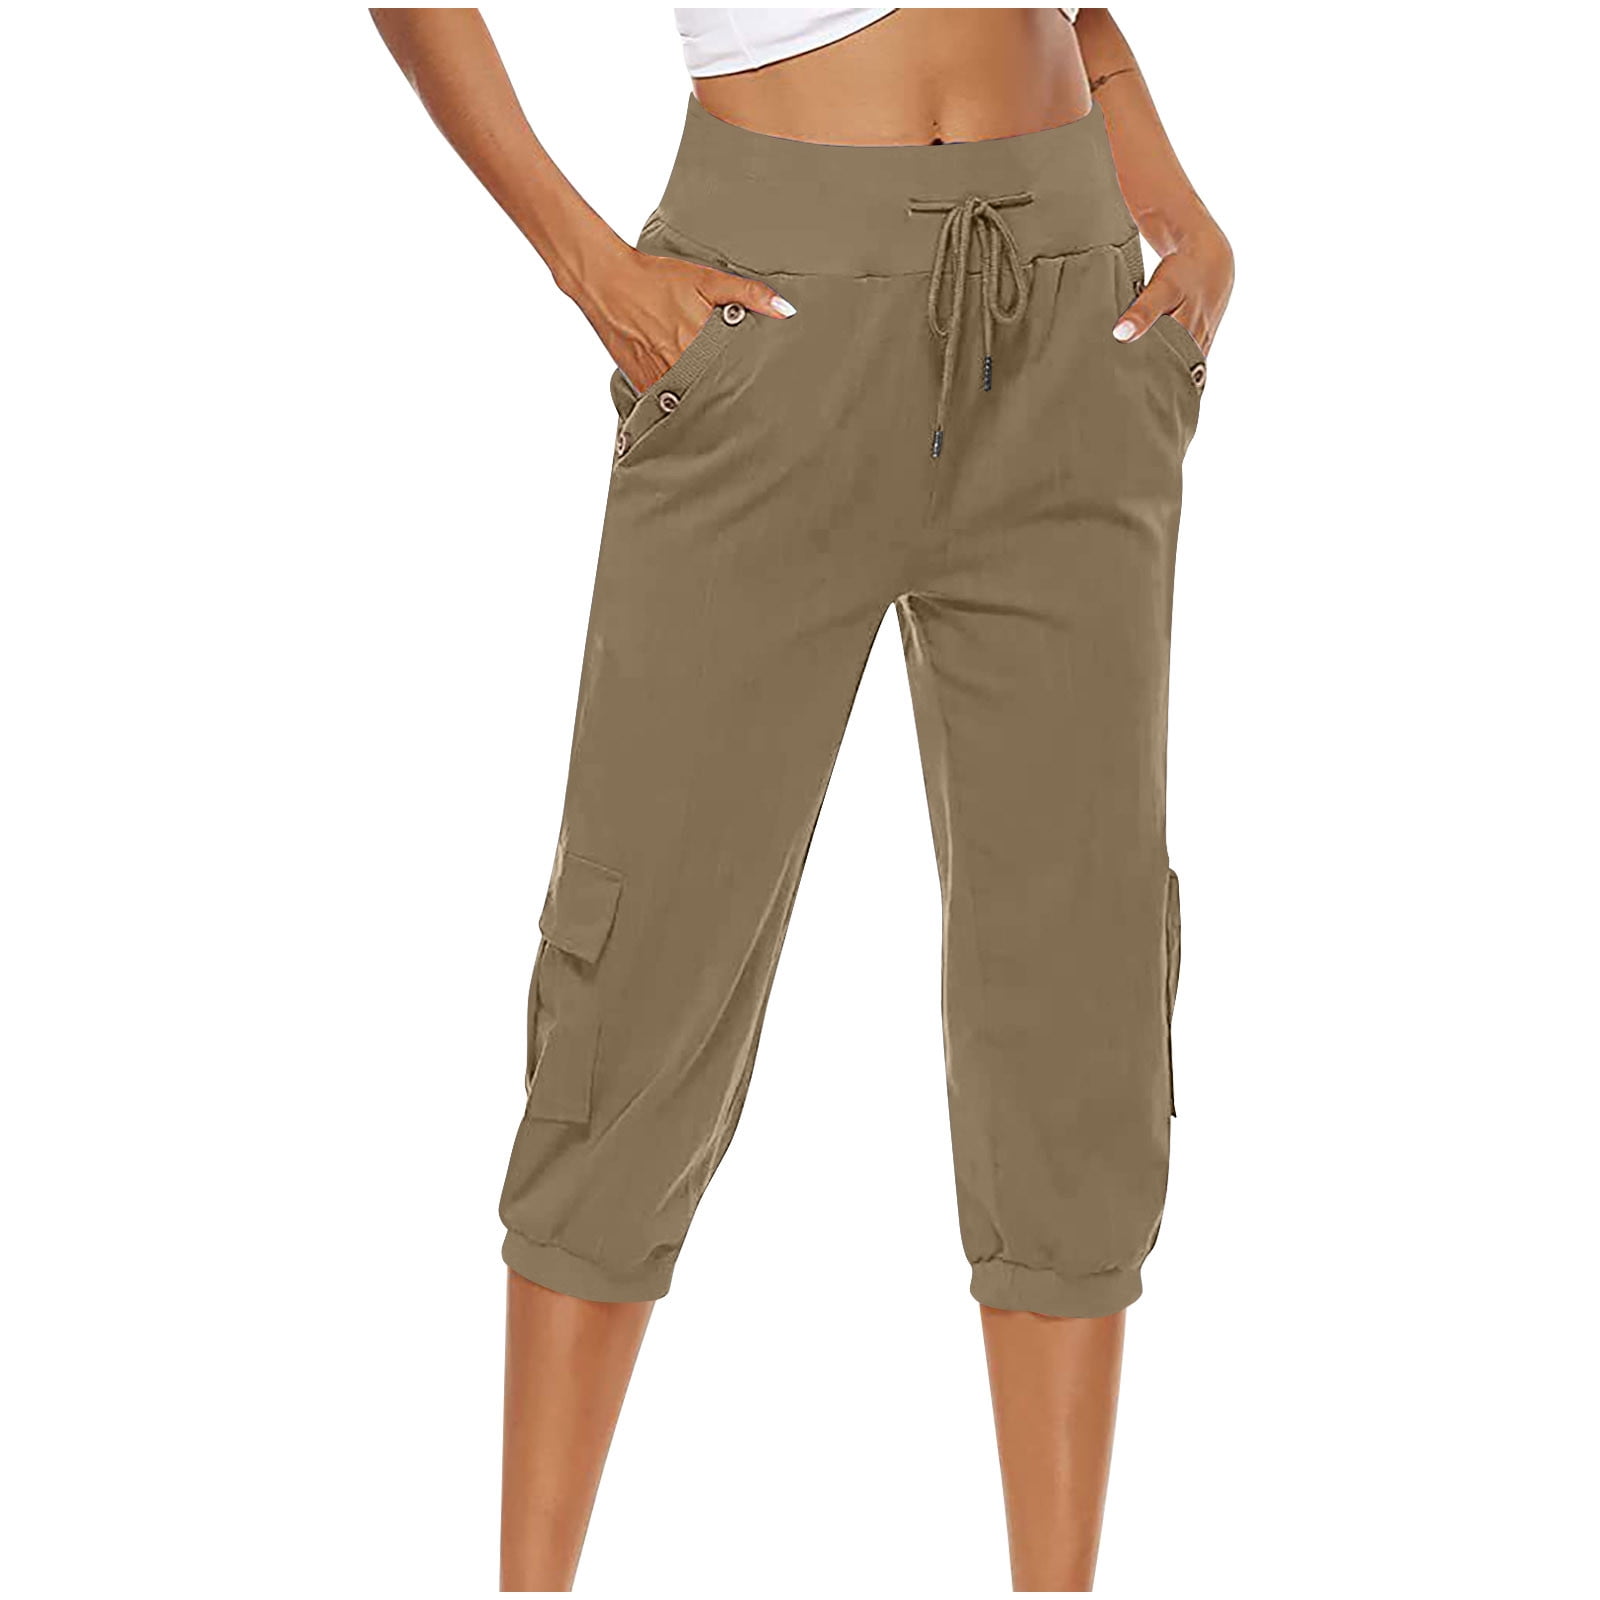 DeHolifer Women's Hiking Cargo Joggers Pants Lightweight Quick Dry ...